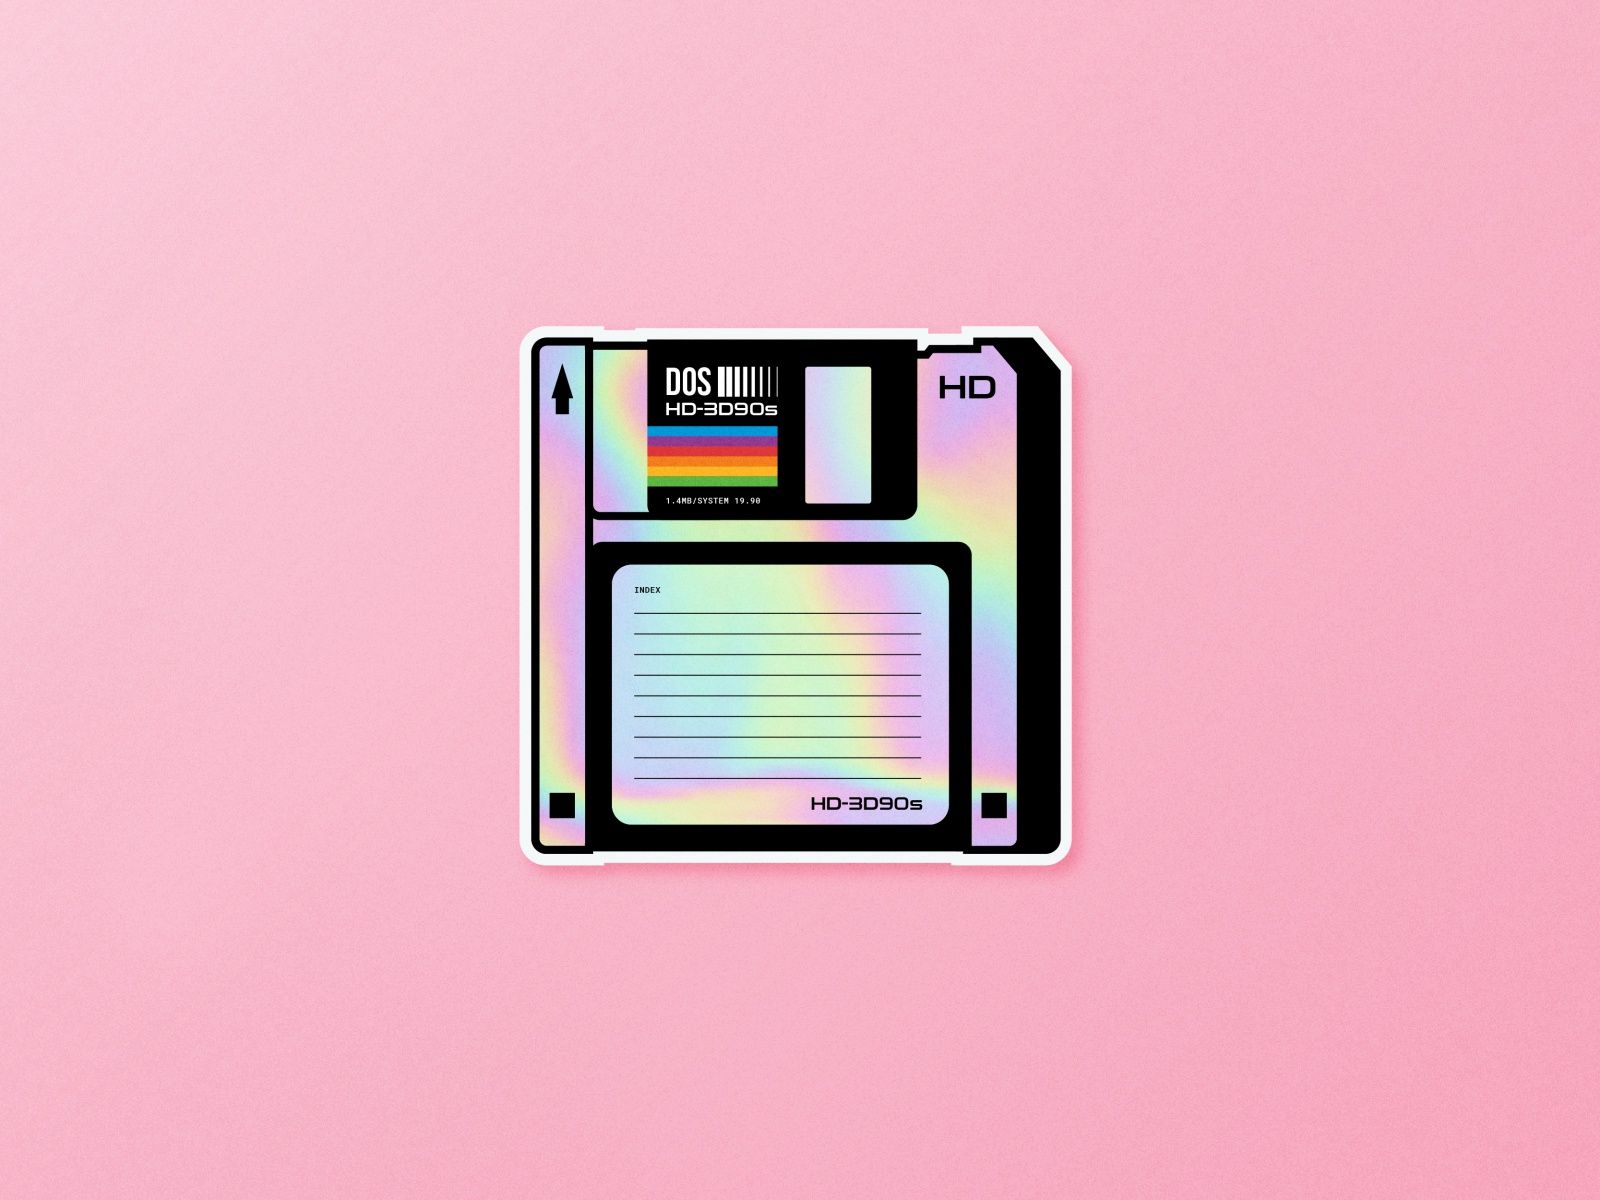 Stickermule HD 3d90s Floppy Disk S Sticker